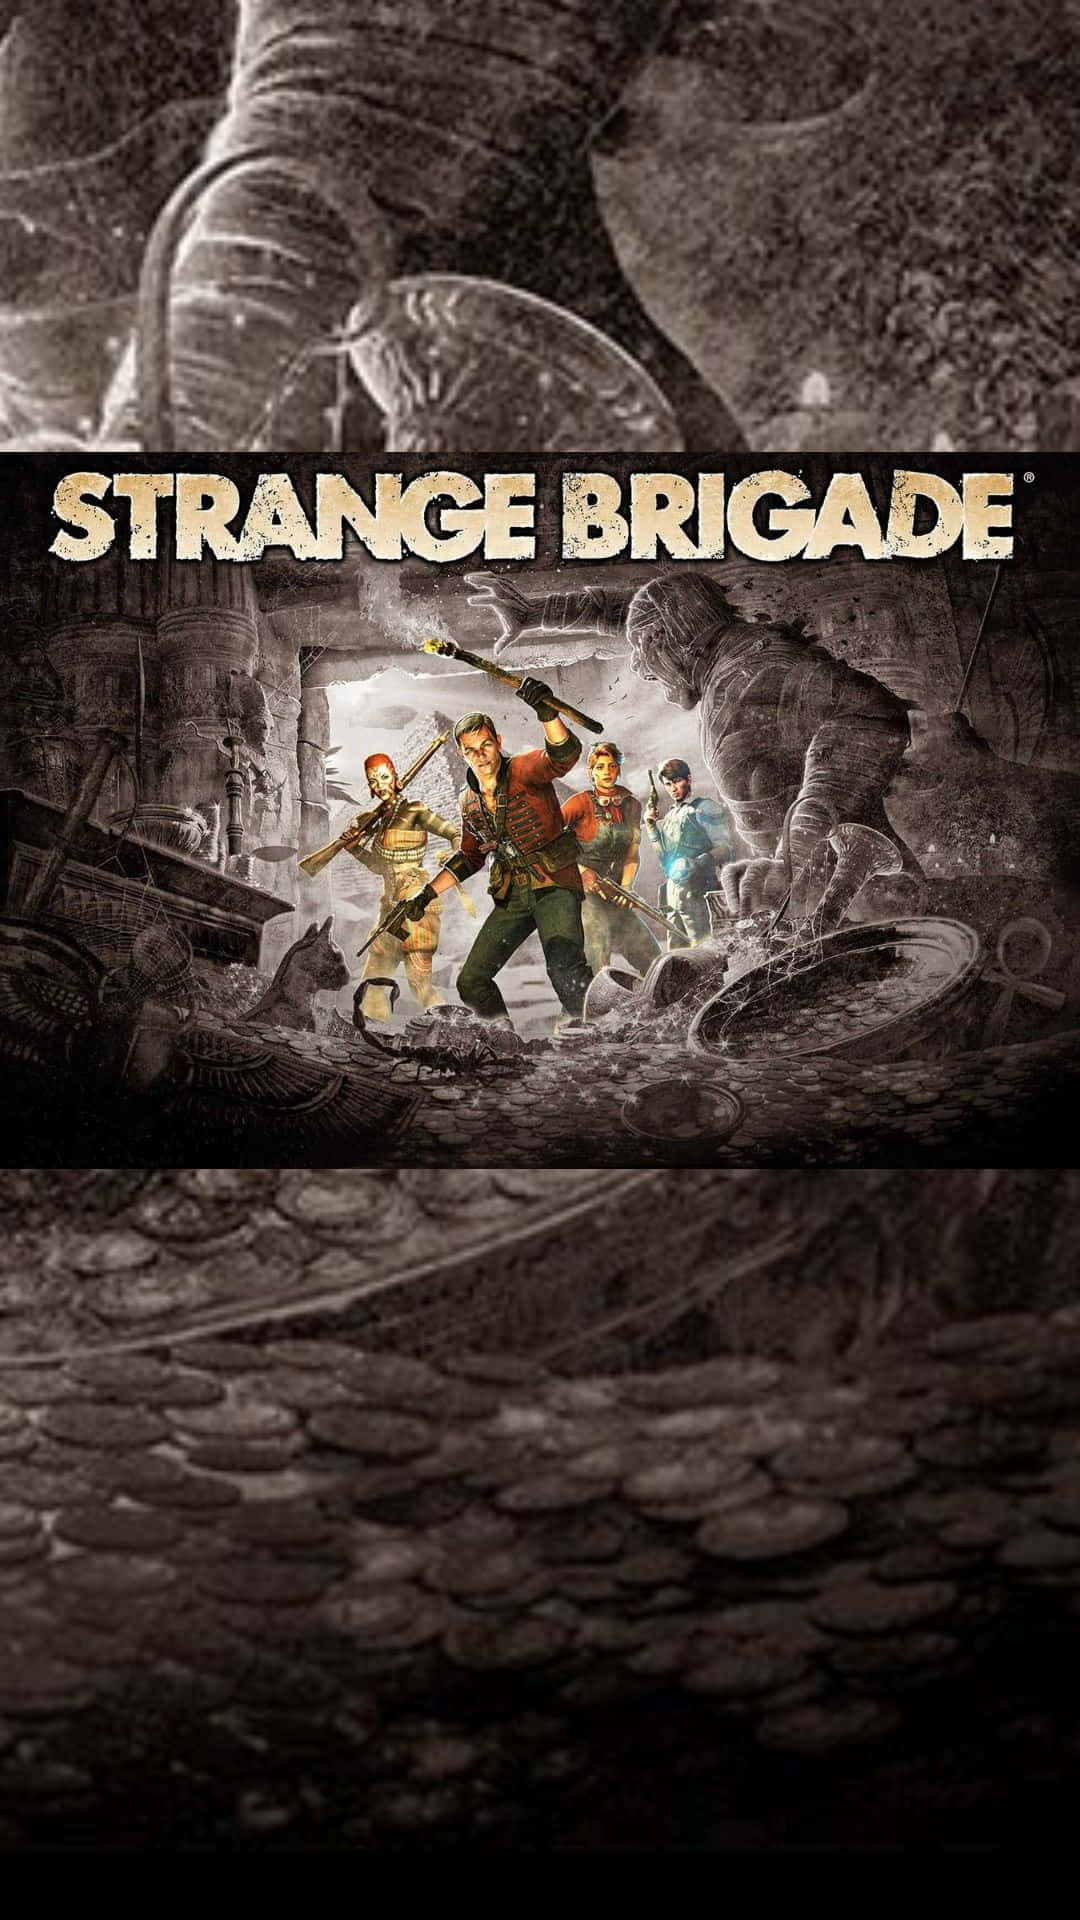 Intense Action in the World of Strange Brigade